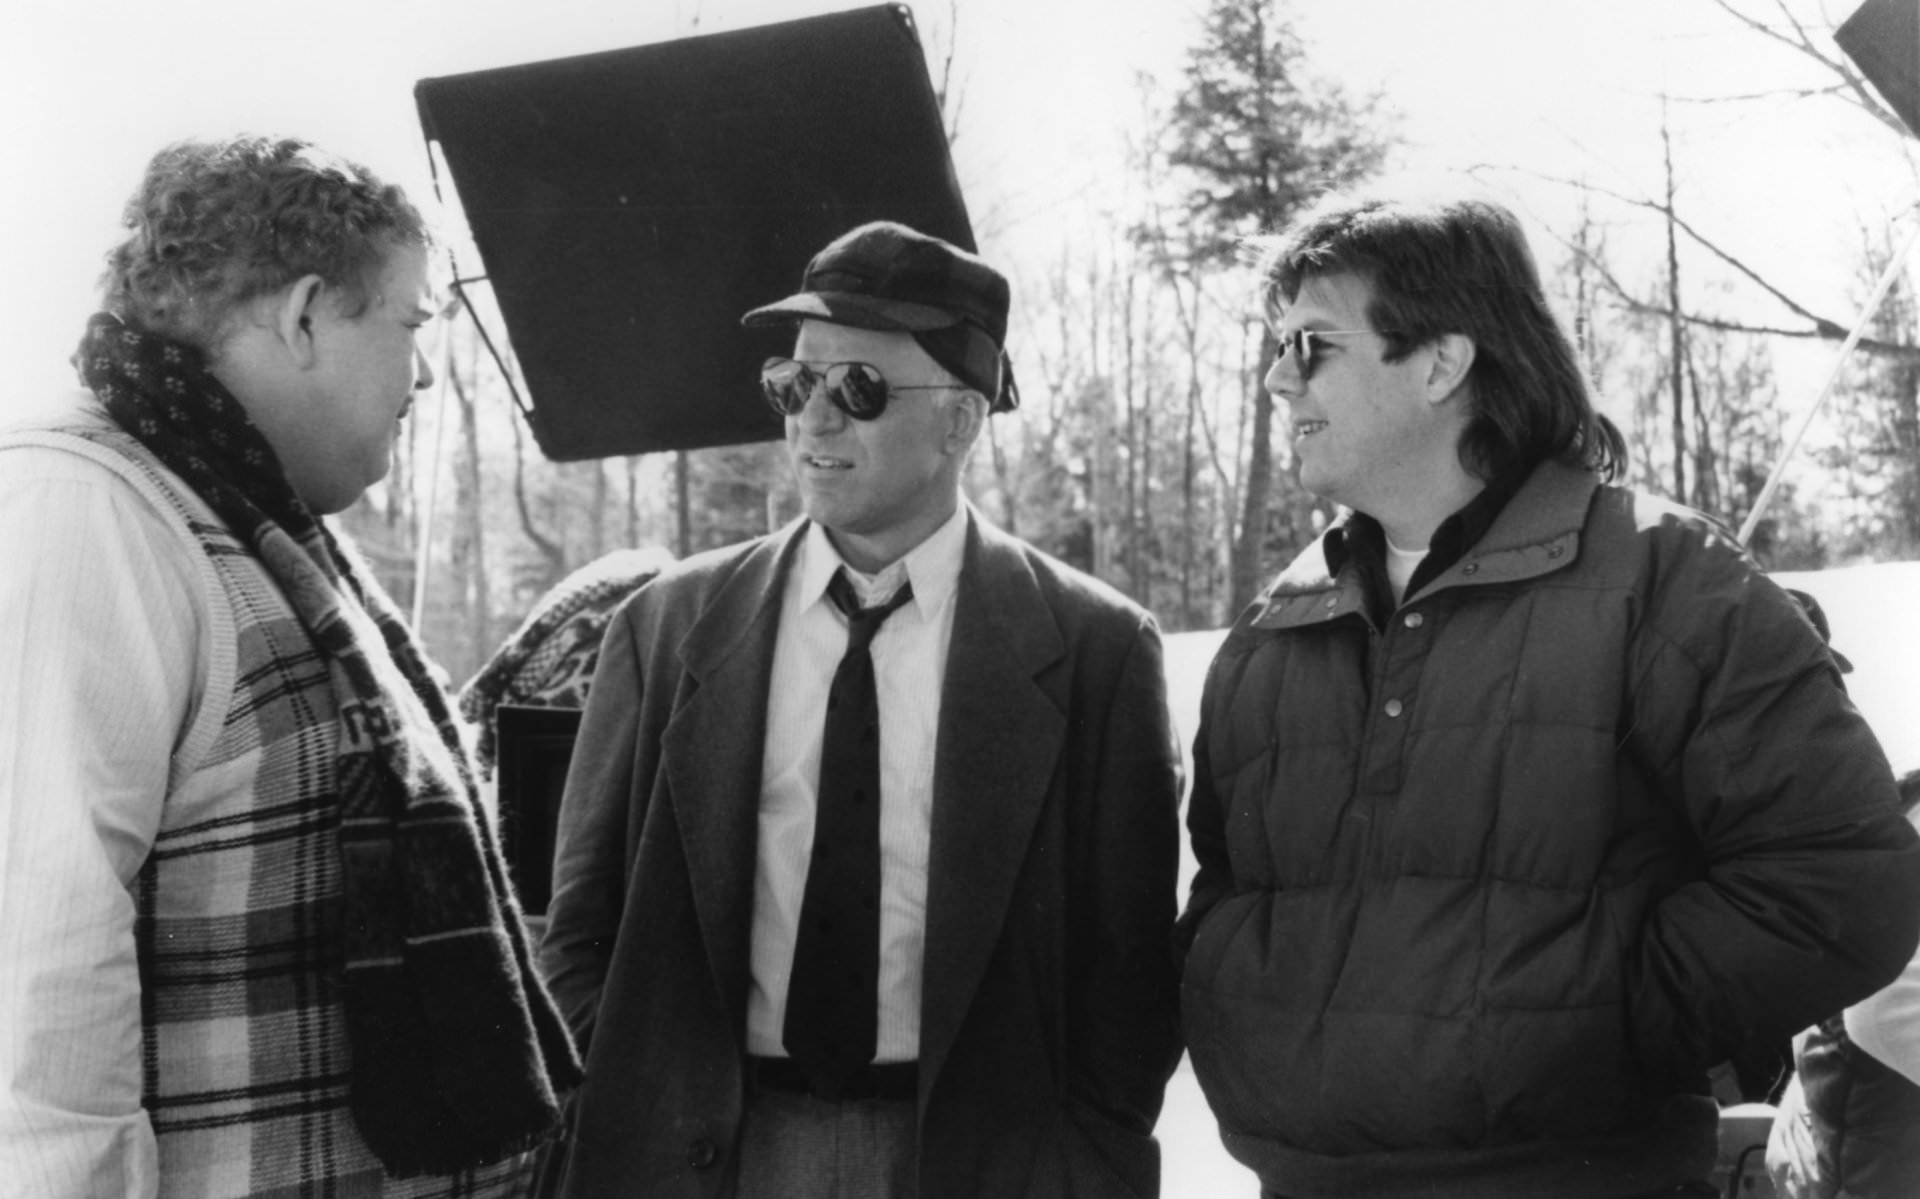 John Candy, Steven Martin and director John Hughes discuss a scene for Planes, Trains & Automobiles (1987).